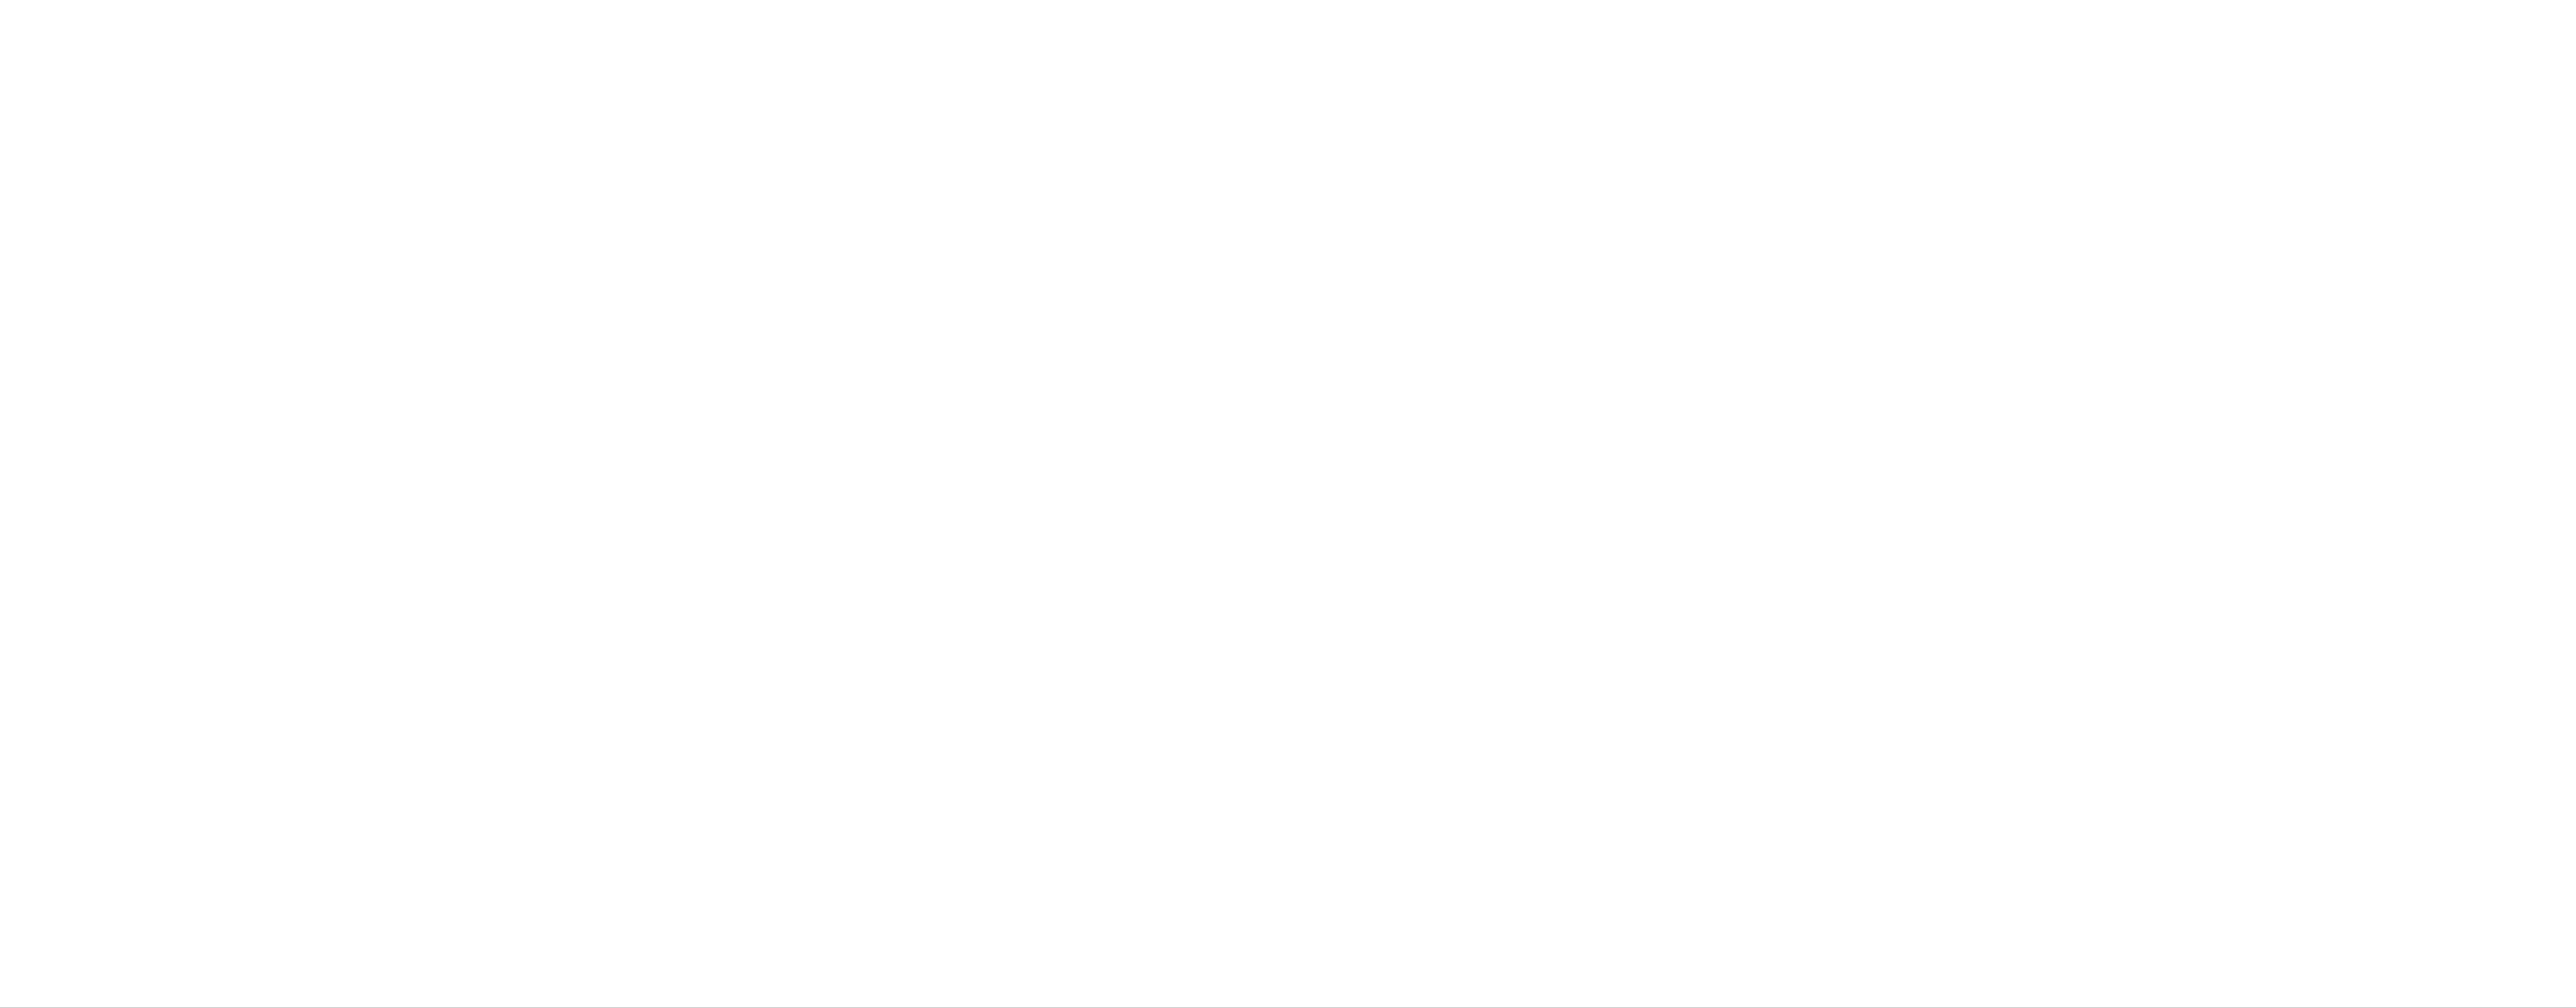 Airplane Repo logo